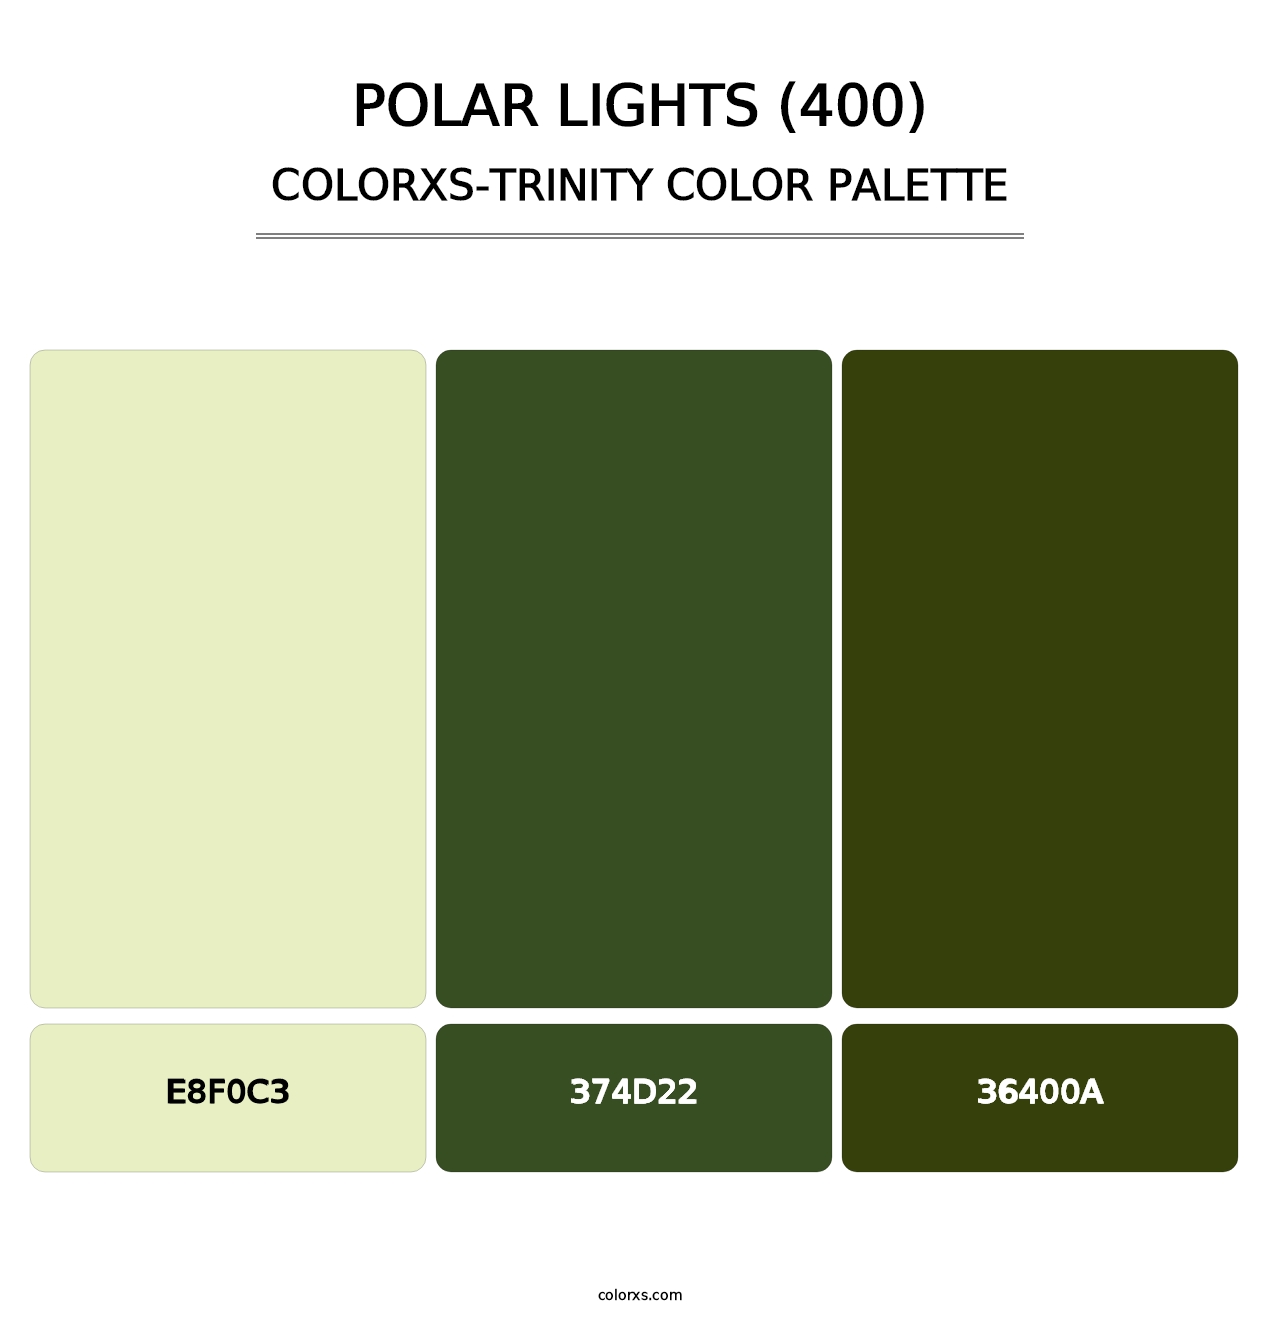 Polar Lights (400) - Colorxs Trinity Palette